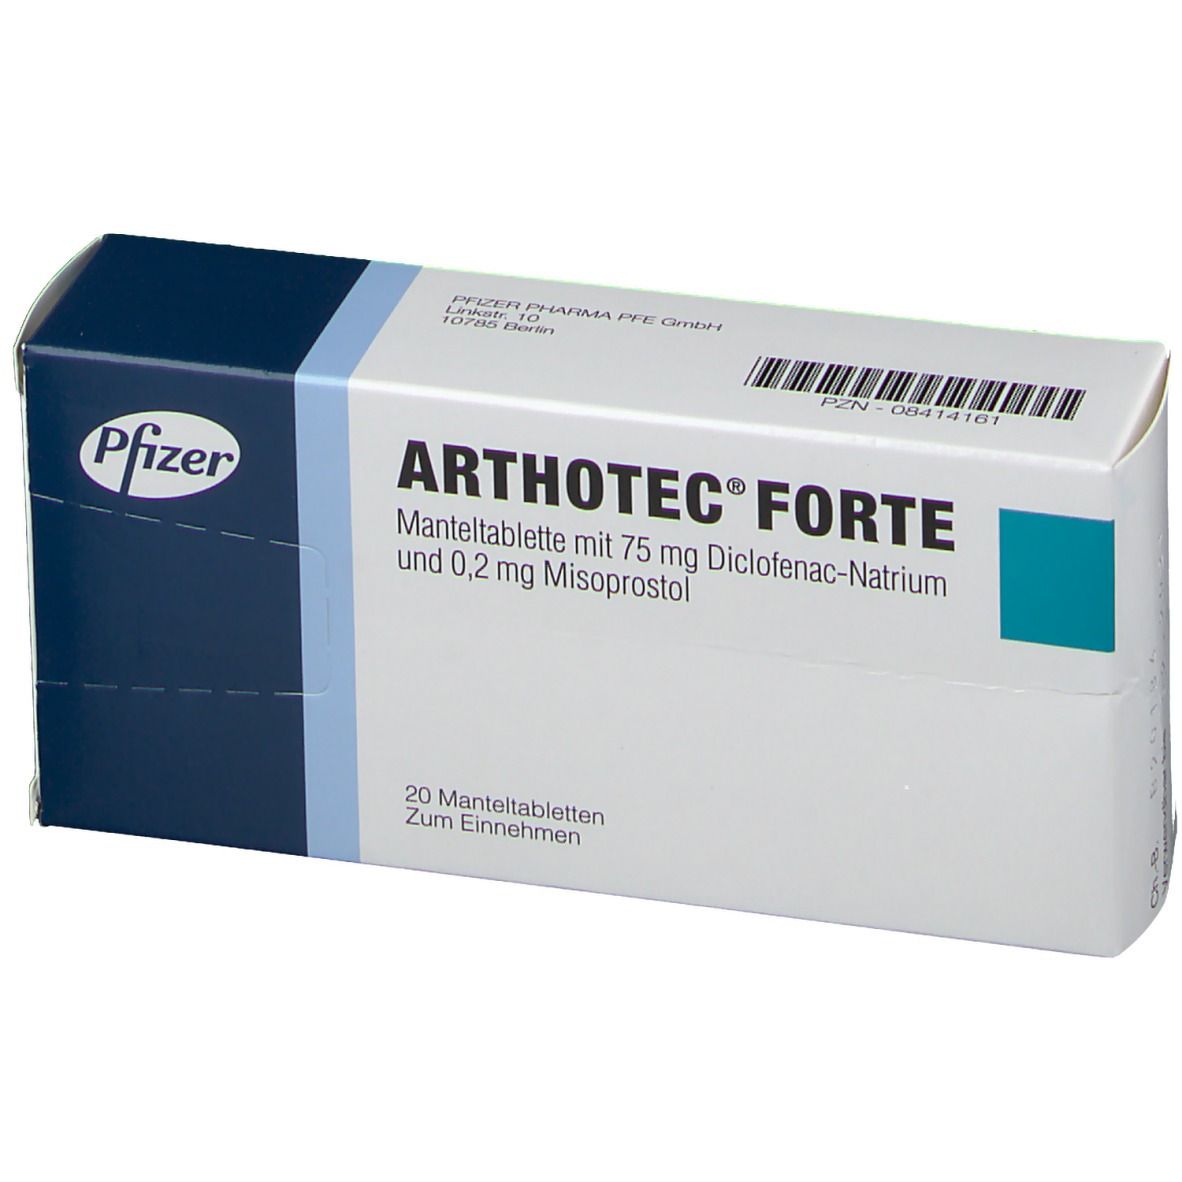 ARTHOTEC® FORTE